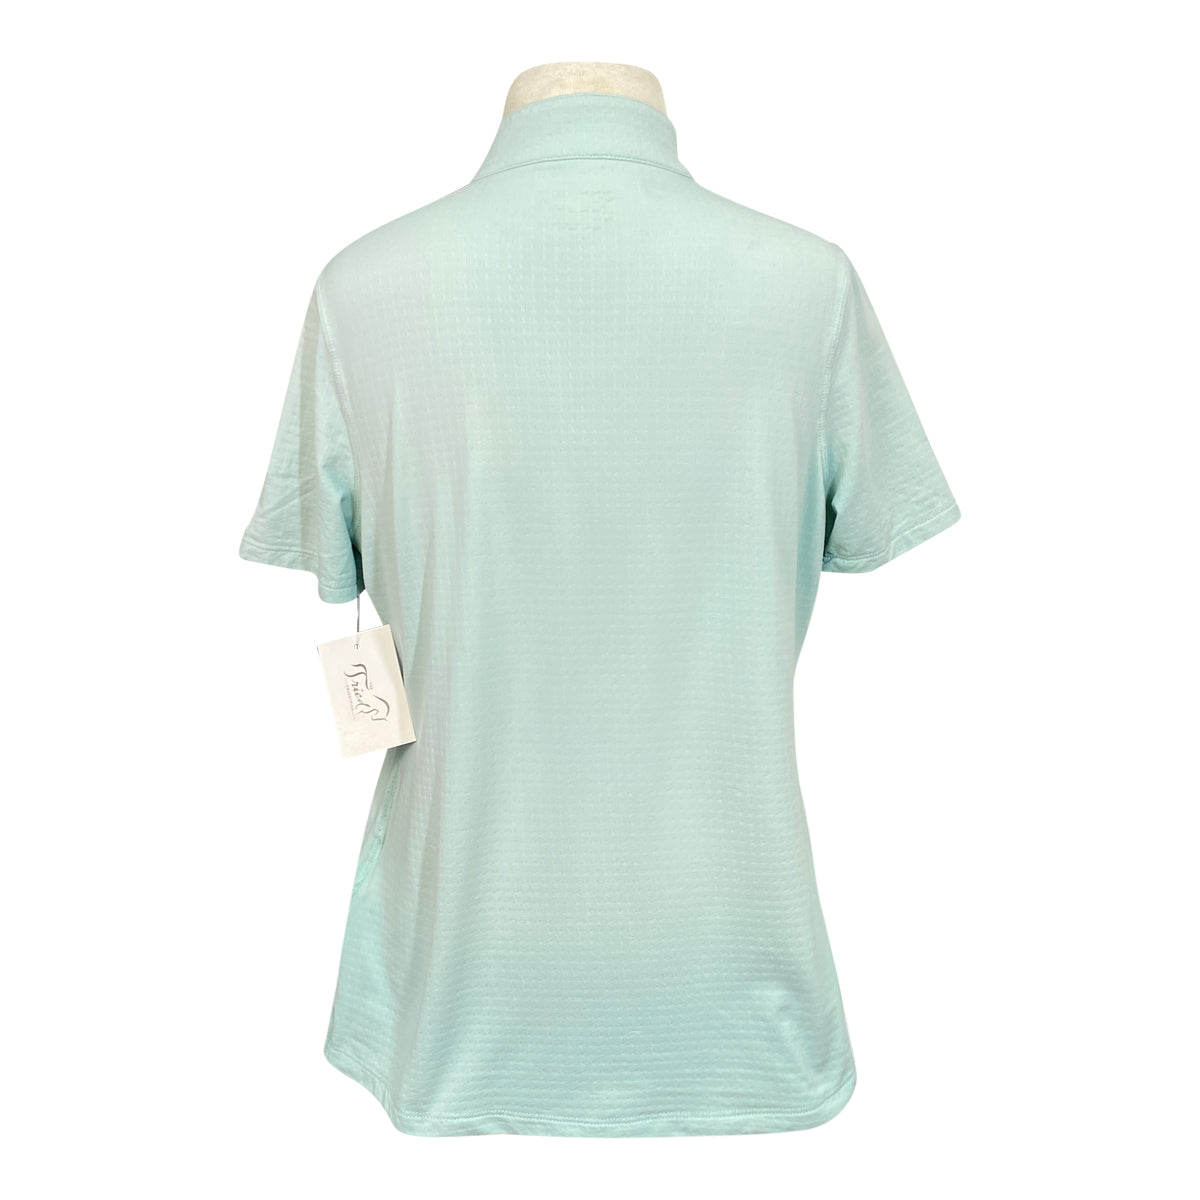 Dover Saddlery 'CoolBlast 100' Kids’ Short Sleeve Shirt in Mint